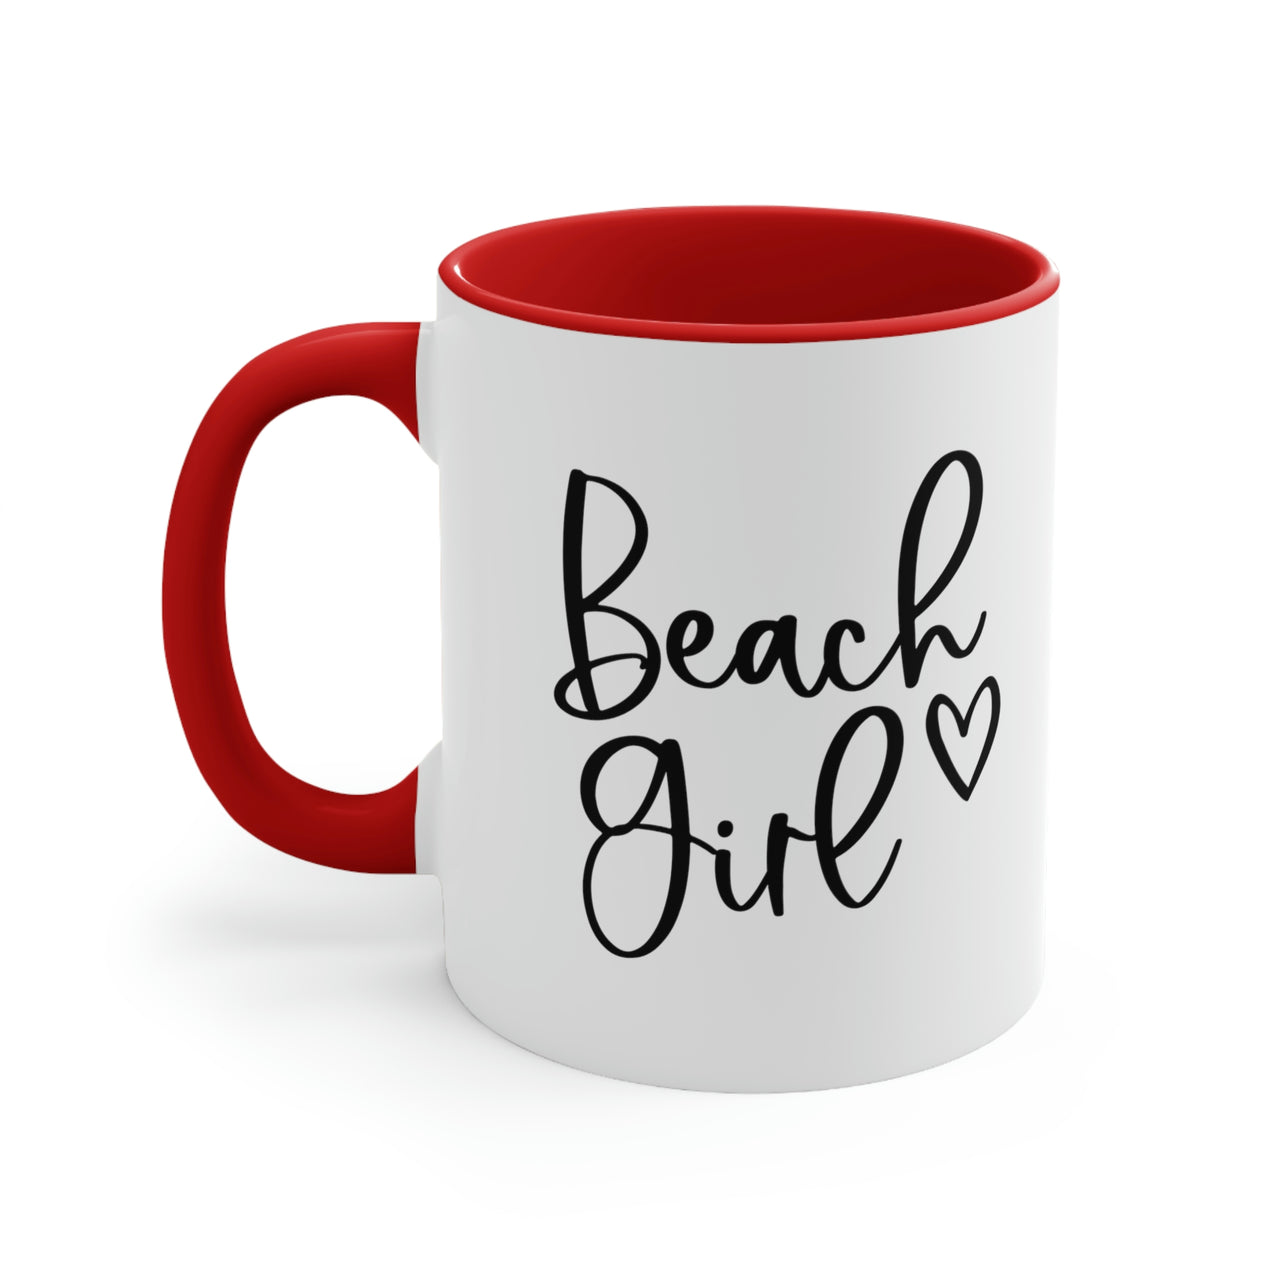 Beach Girl Ceramic Coffee Mug, 5 Colors Mugs New England Trading Co Red  